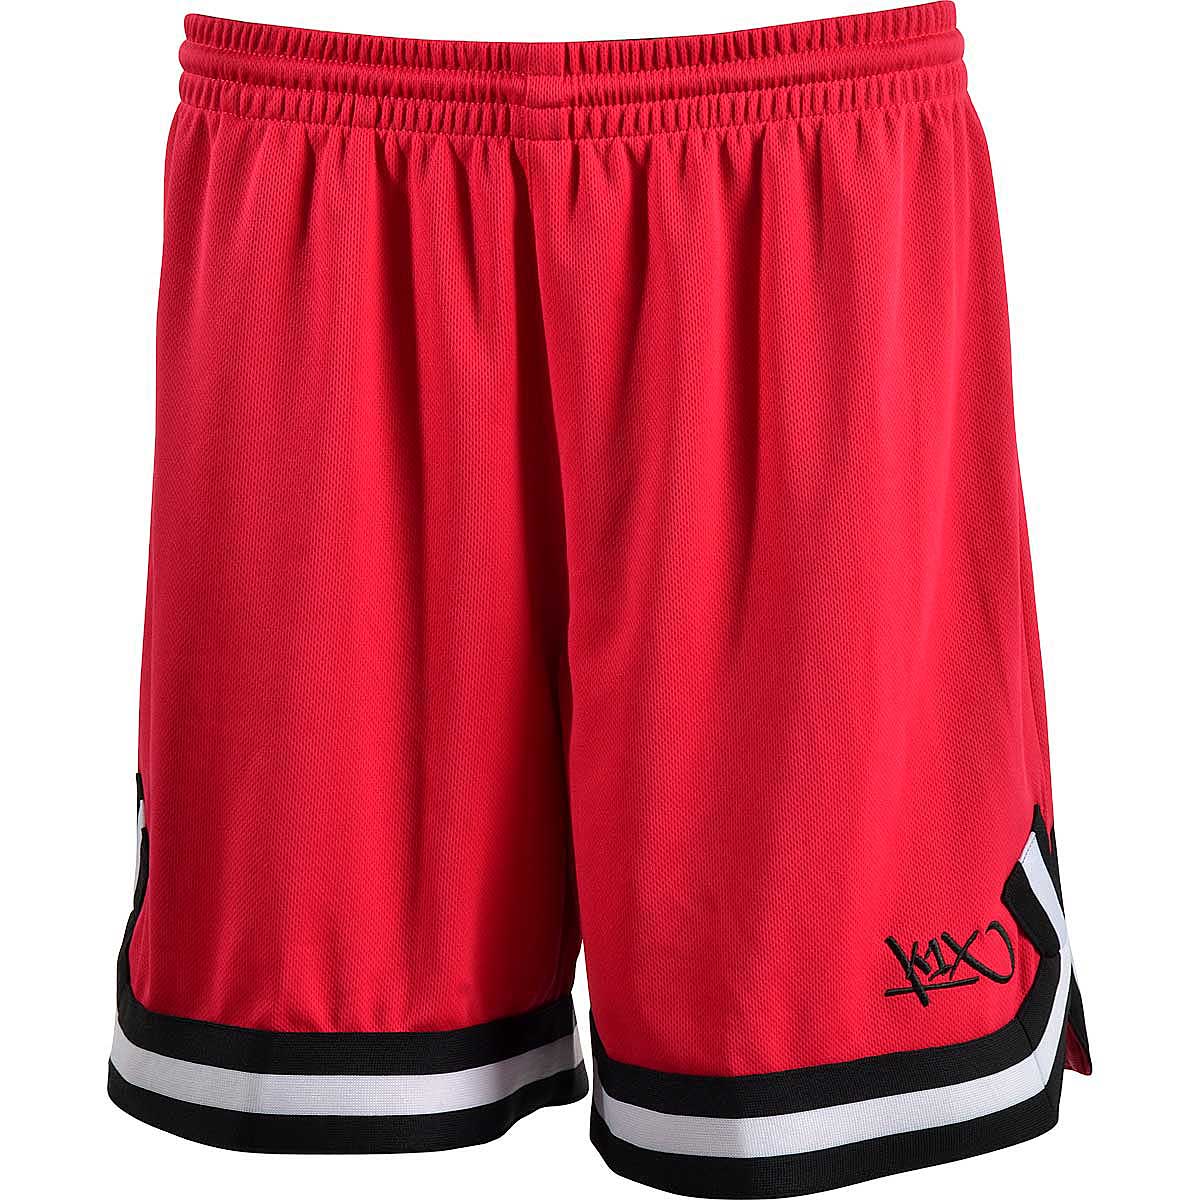 K1X Wmns K1X Hardwood Ladies Double X Shorts, Cherry Red/Black/White